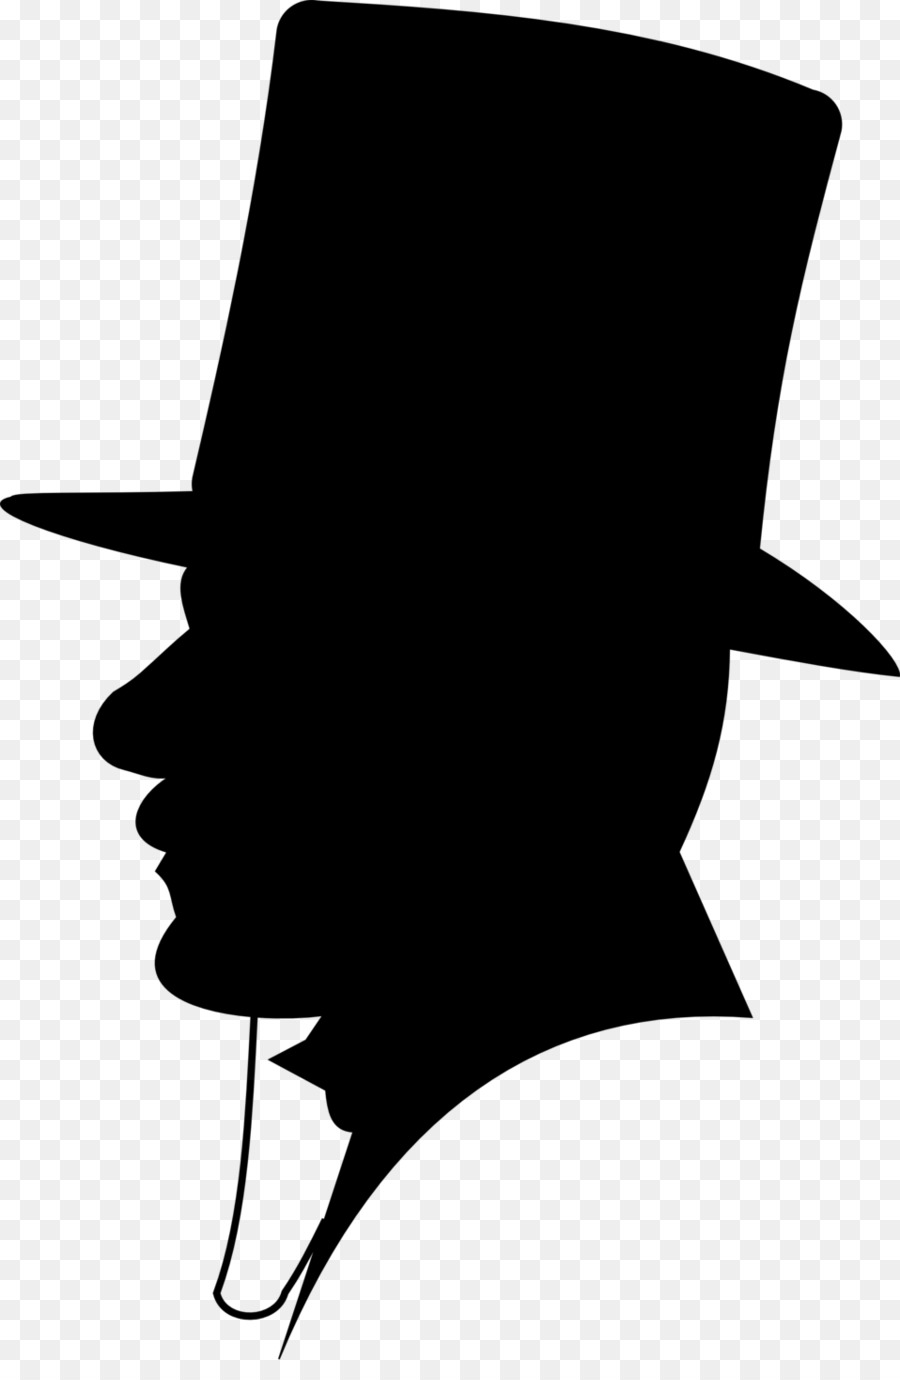 Doctor Watson Sherlock Holmes Professor Moriarty Silhouette Drawing - sherlock png download - 958*1448 - Free Transparent Doctor Watson png Download.